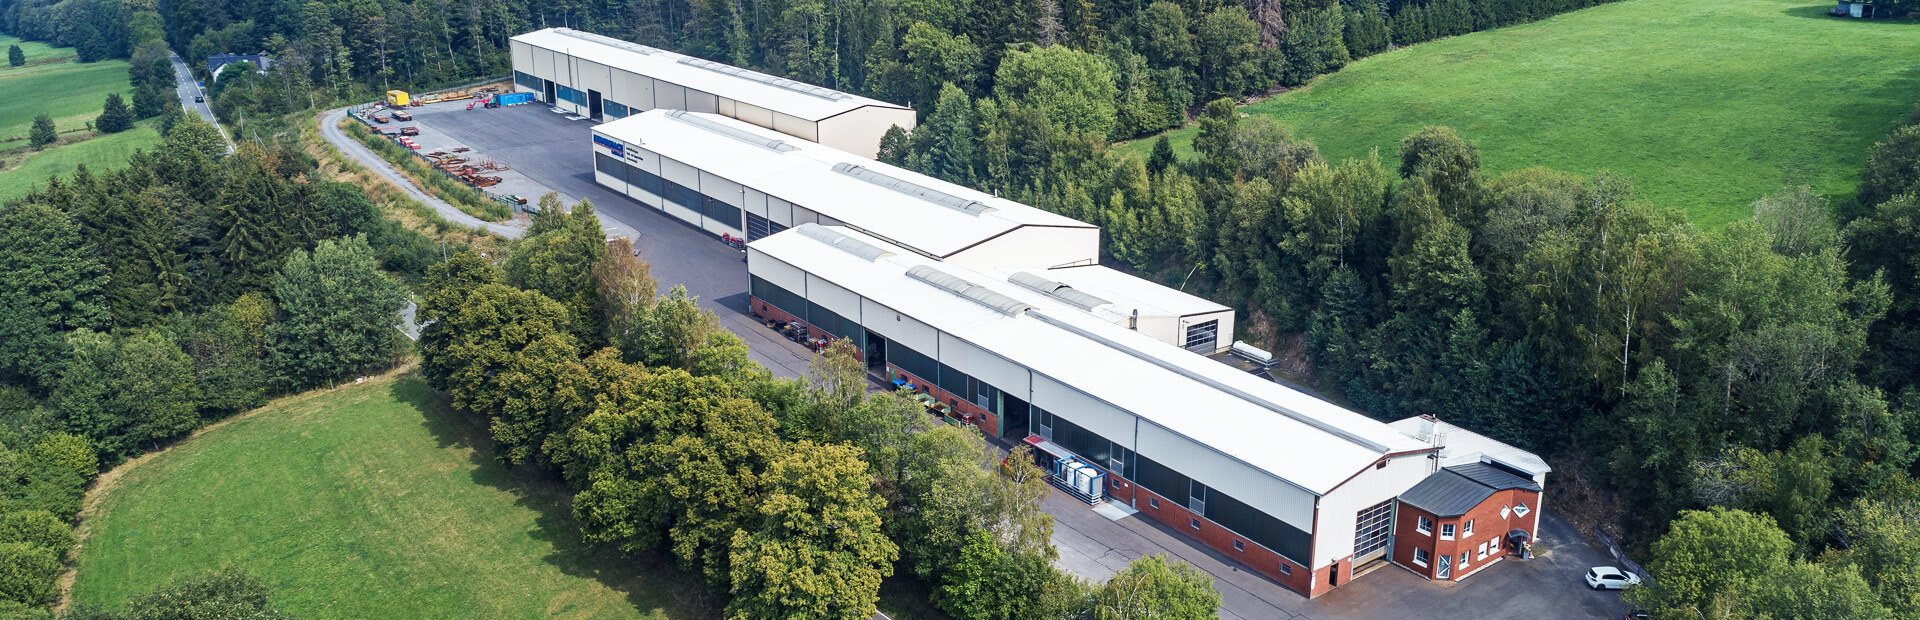 Mudersbach GmbH & Co. KG in Friedwald